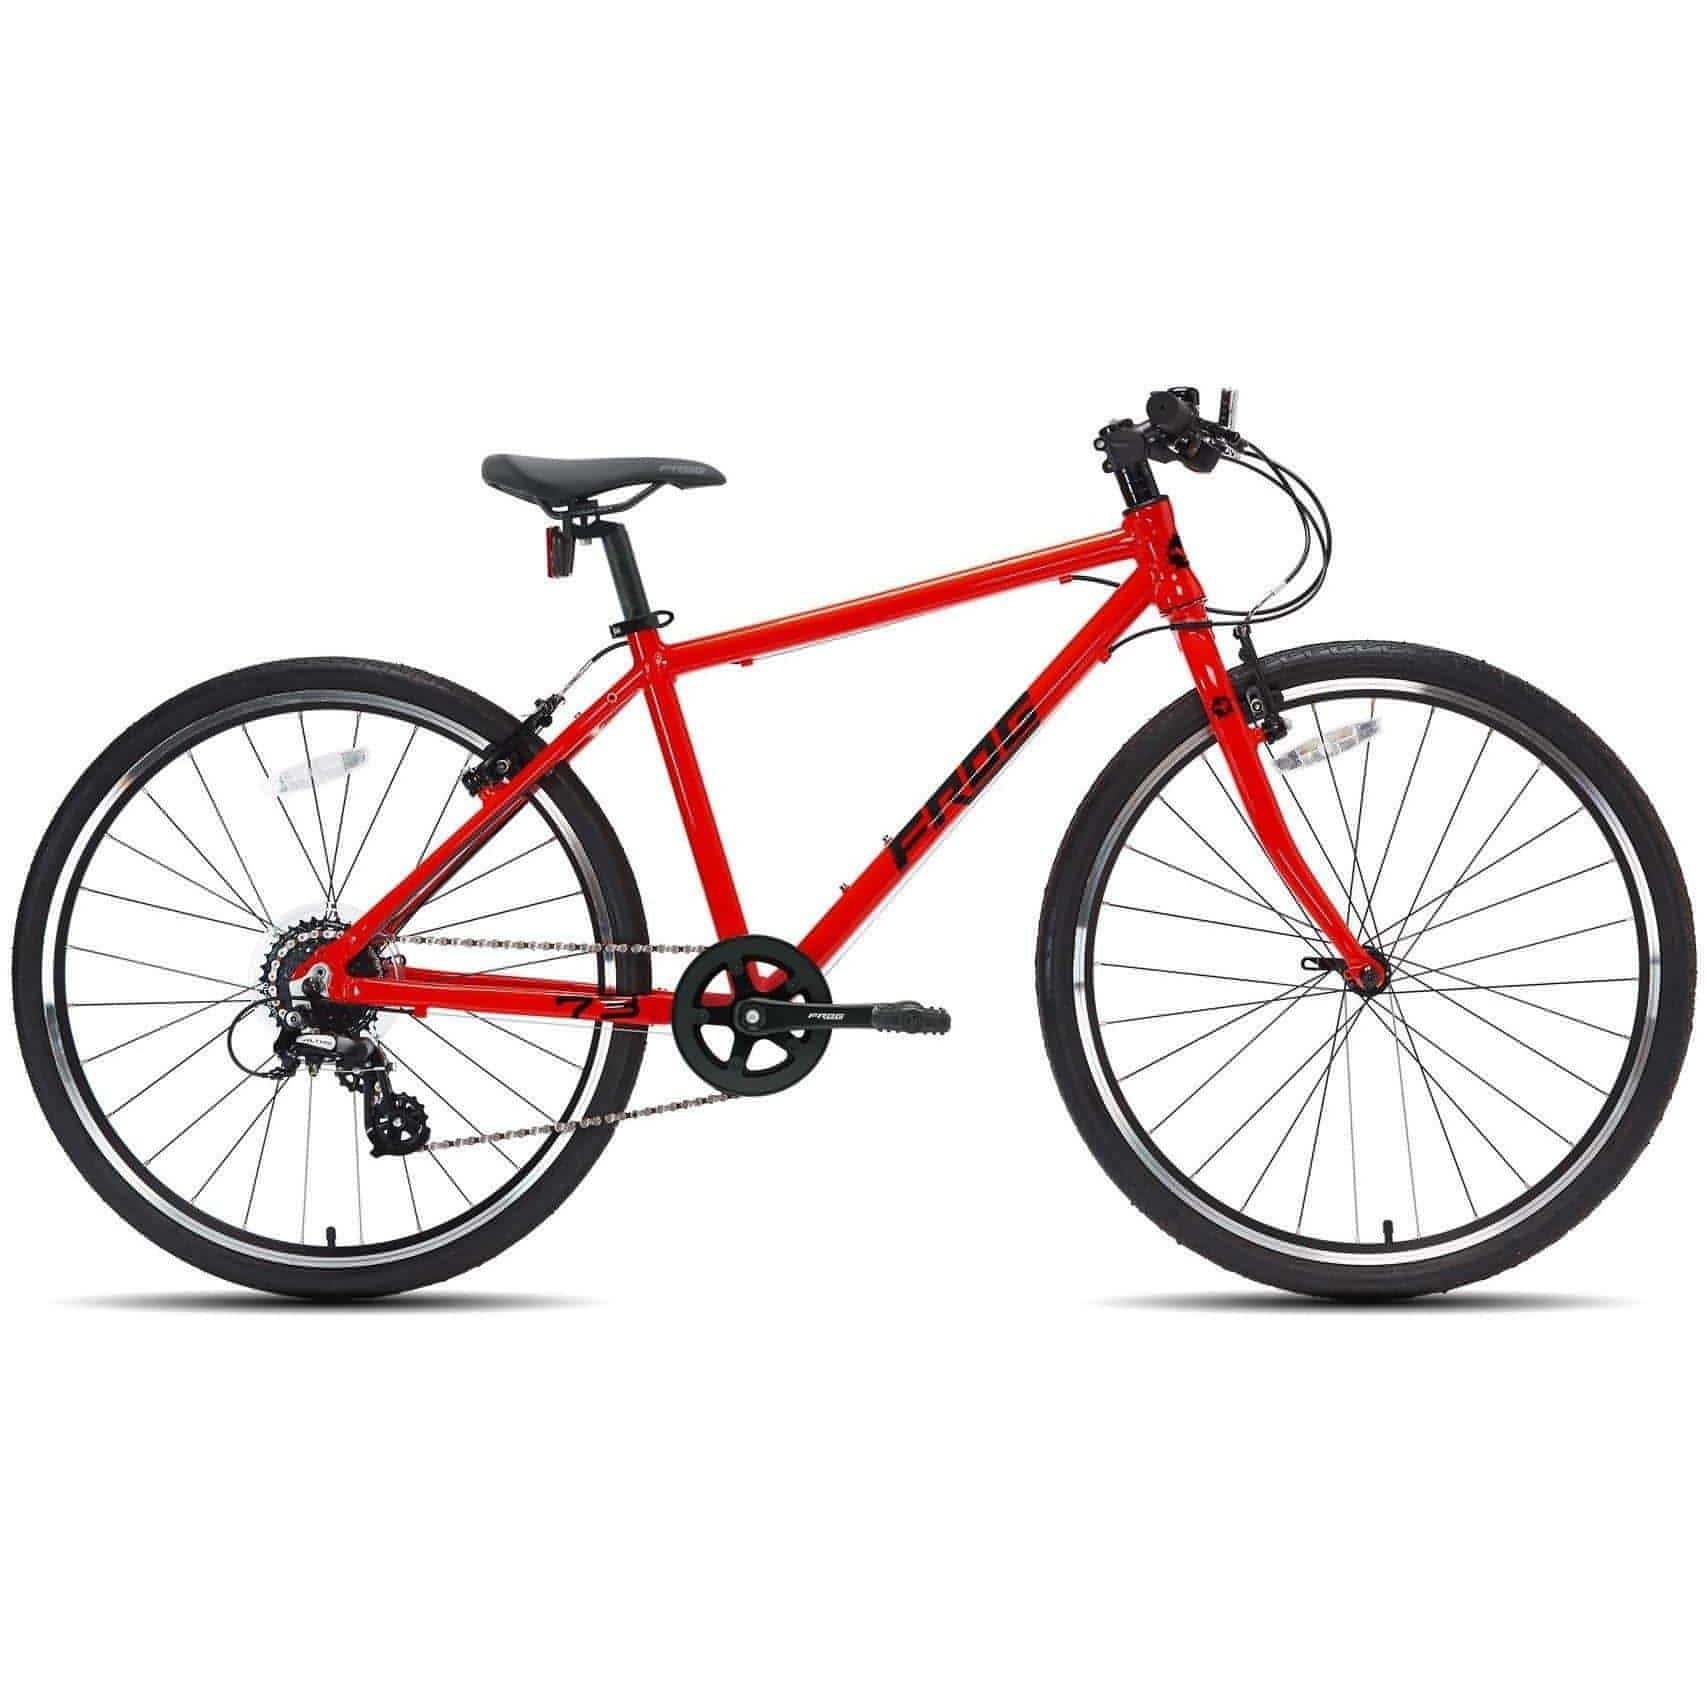 Frog 73 26" Junior Bike 2021 - Neon Red 5060488651151 - Start Fitness